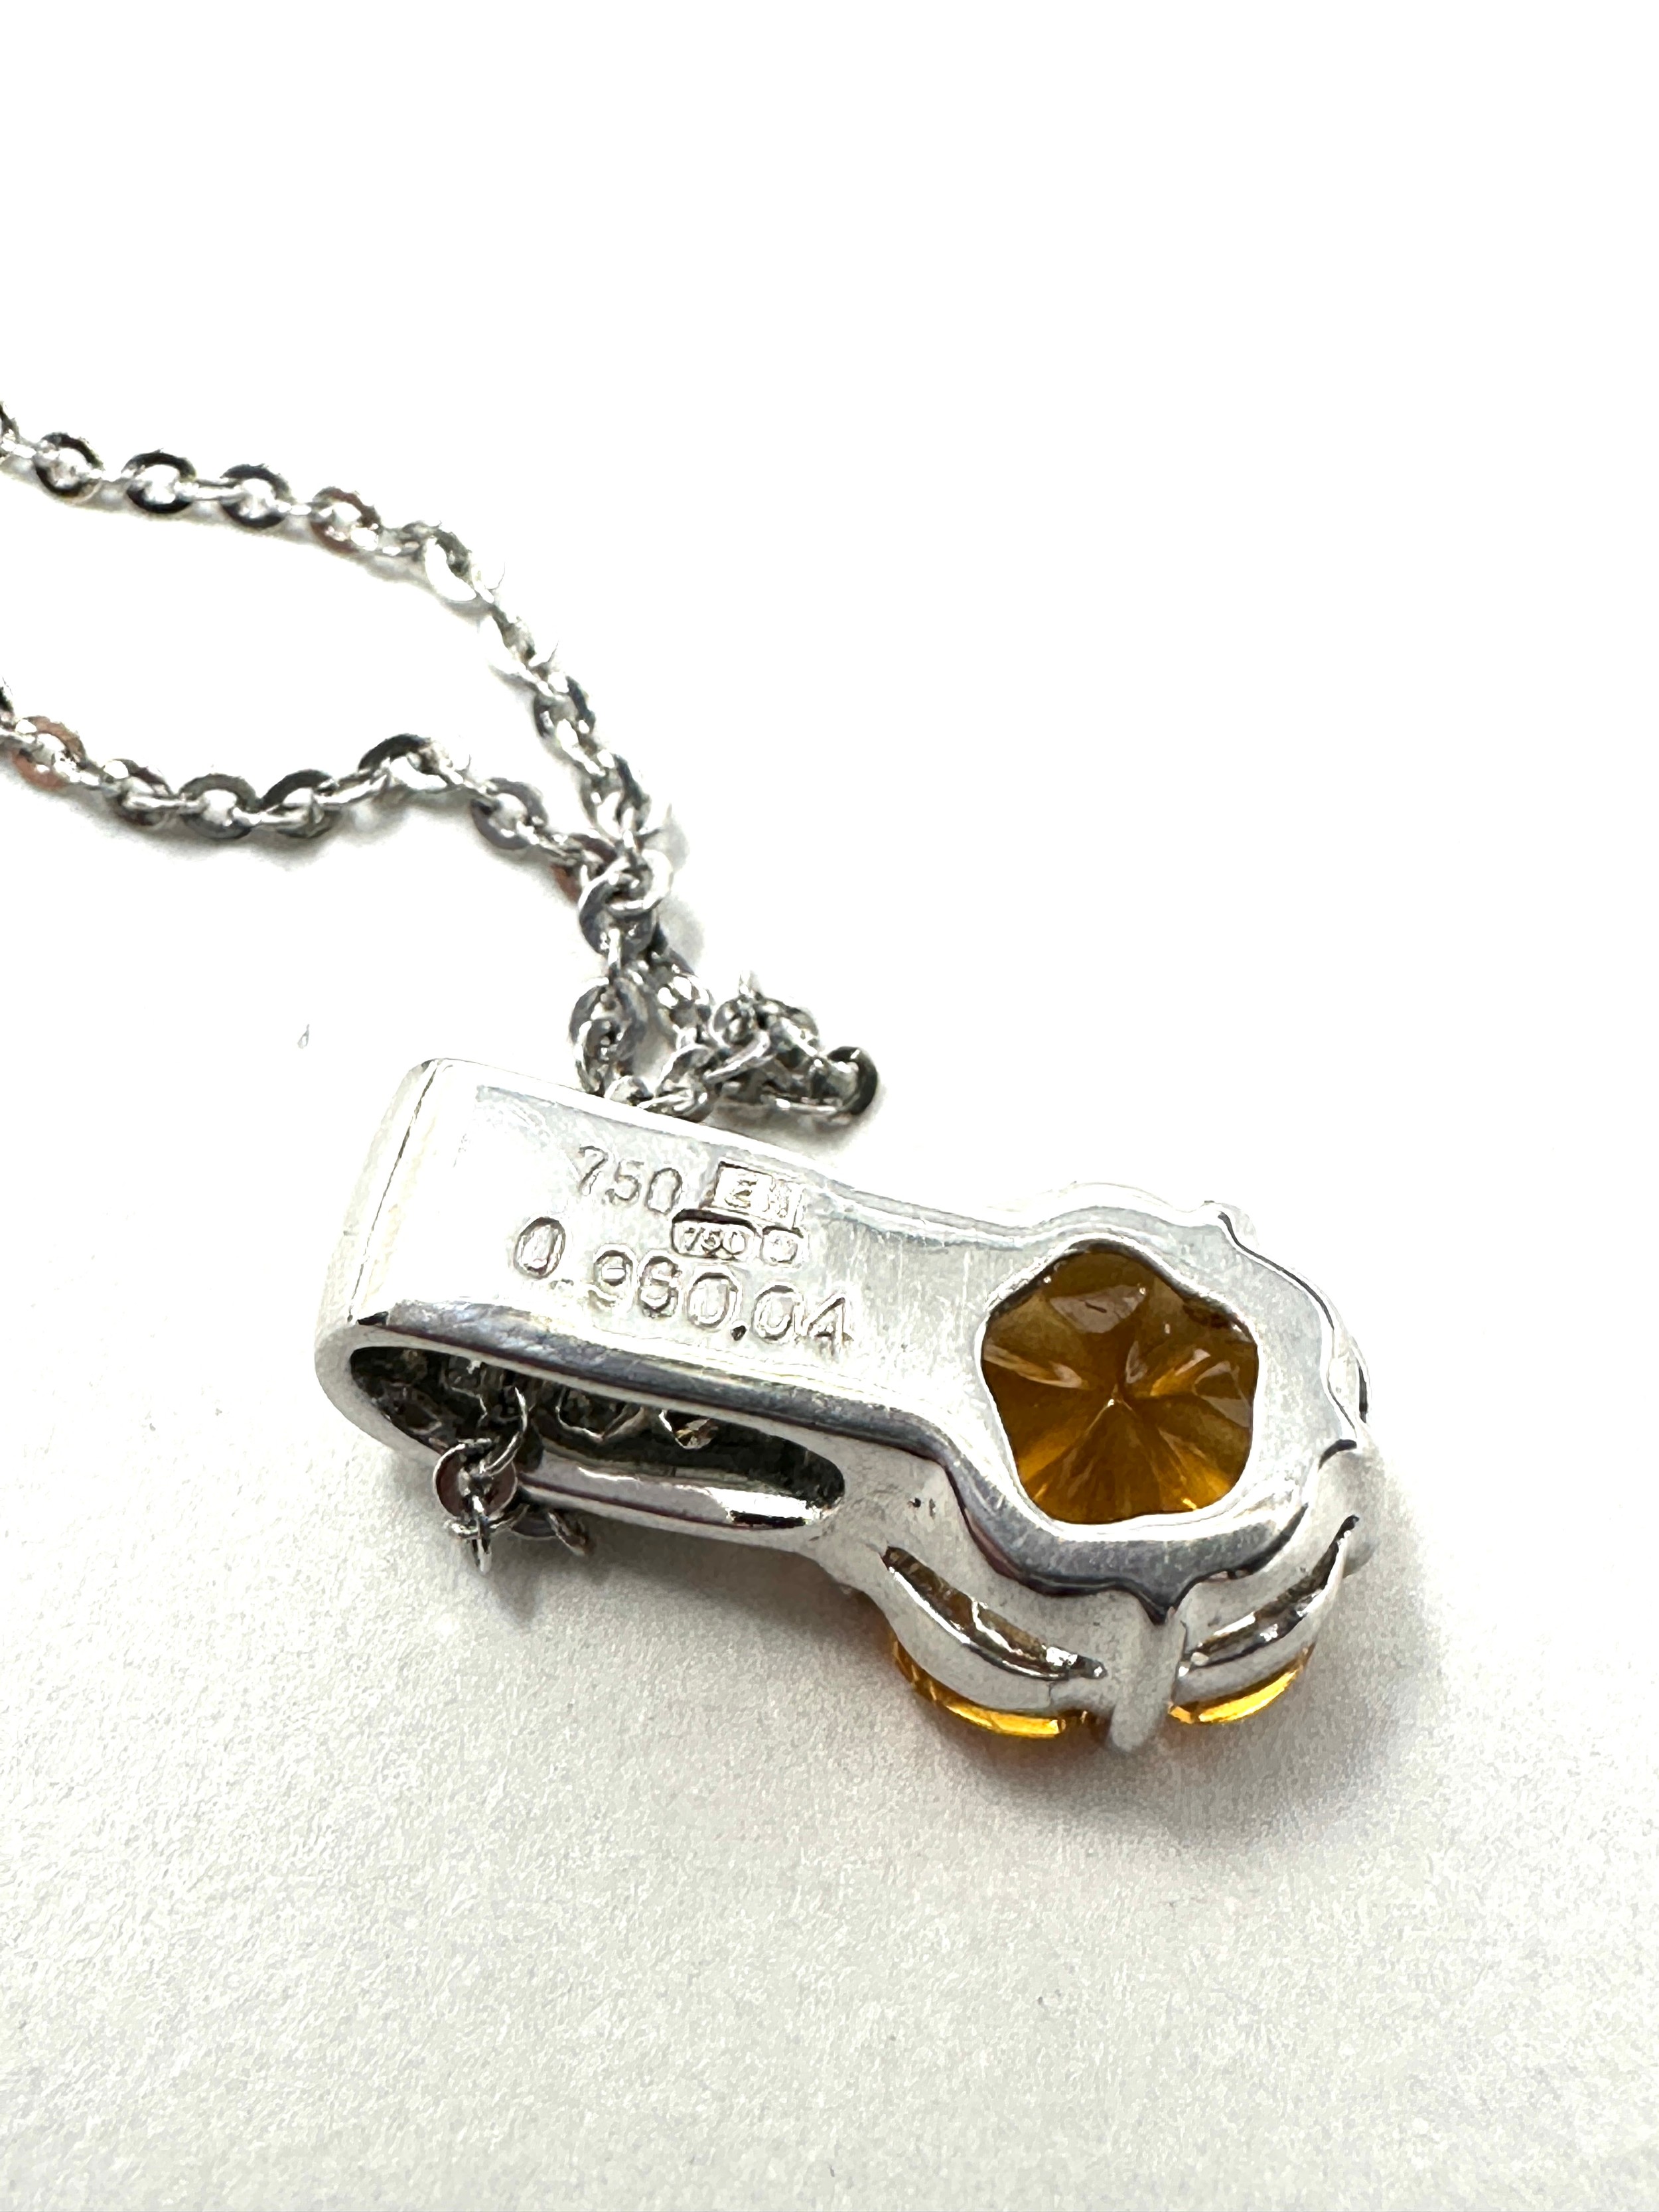 18ct white gold diamond & citrine pendant necklace (2.8g) - Image 3 of 3